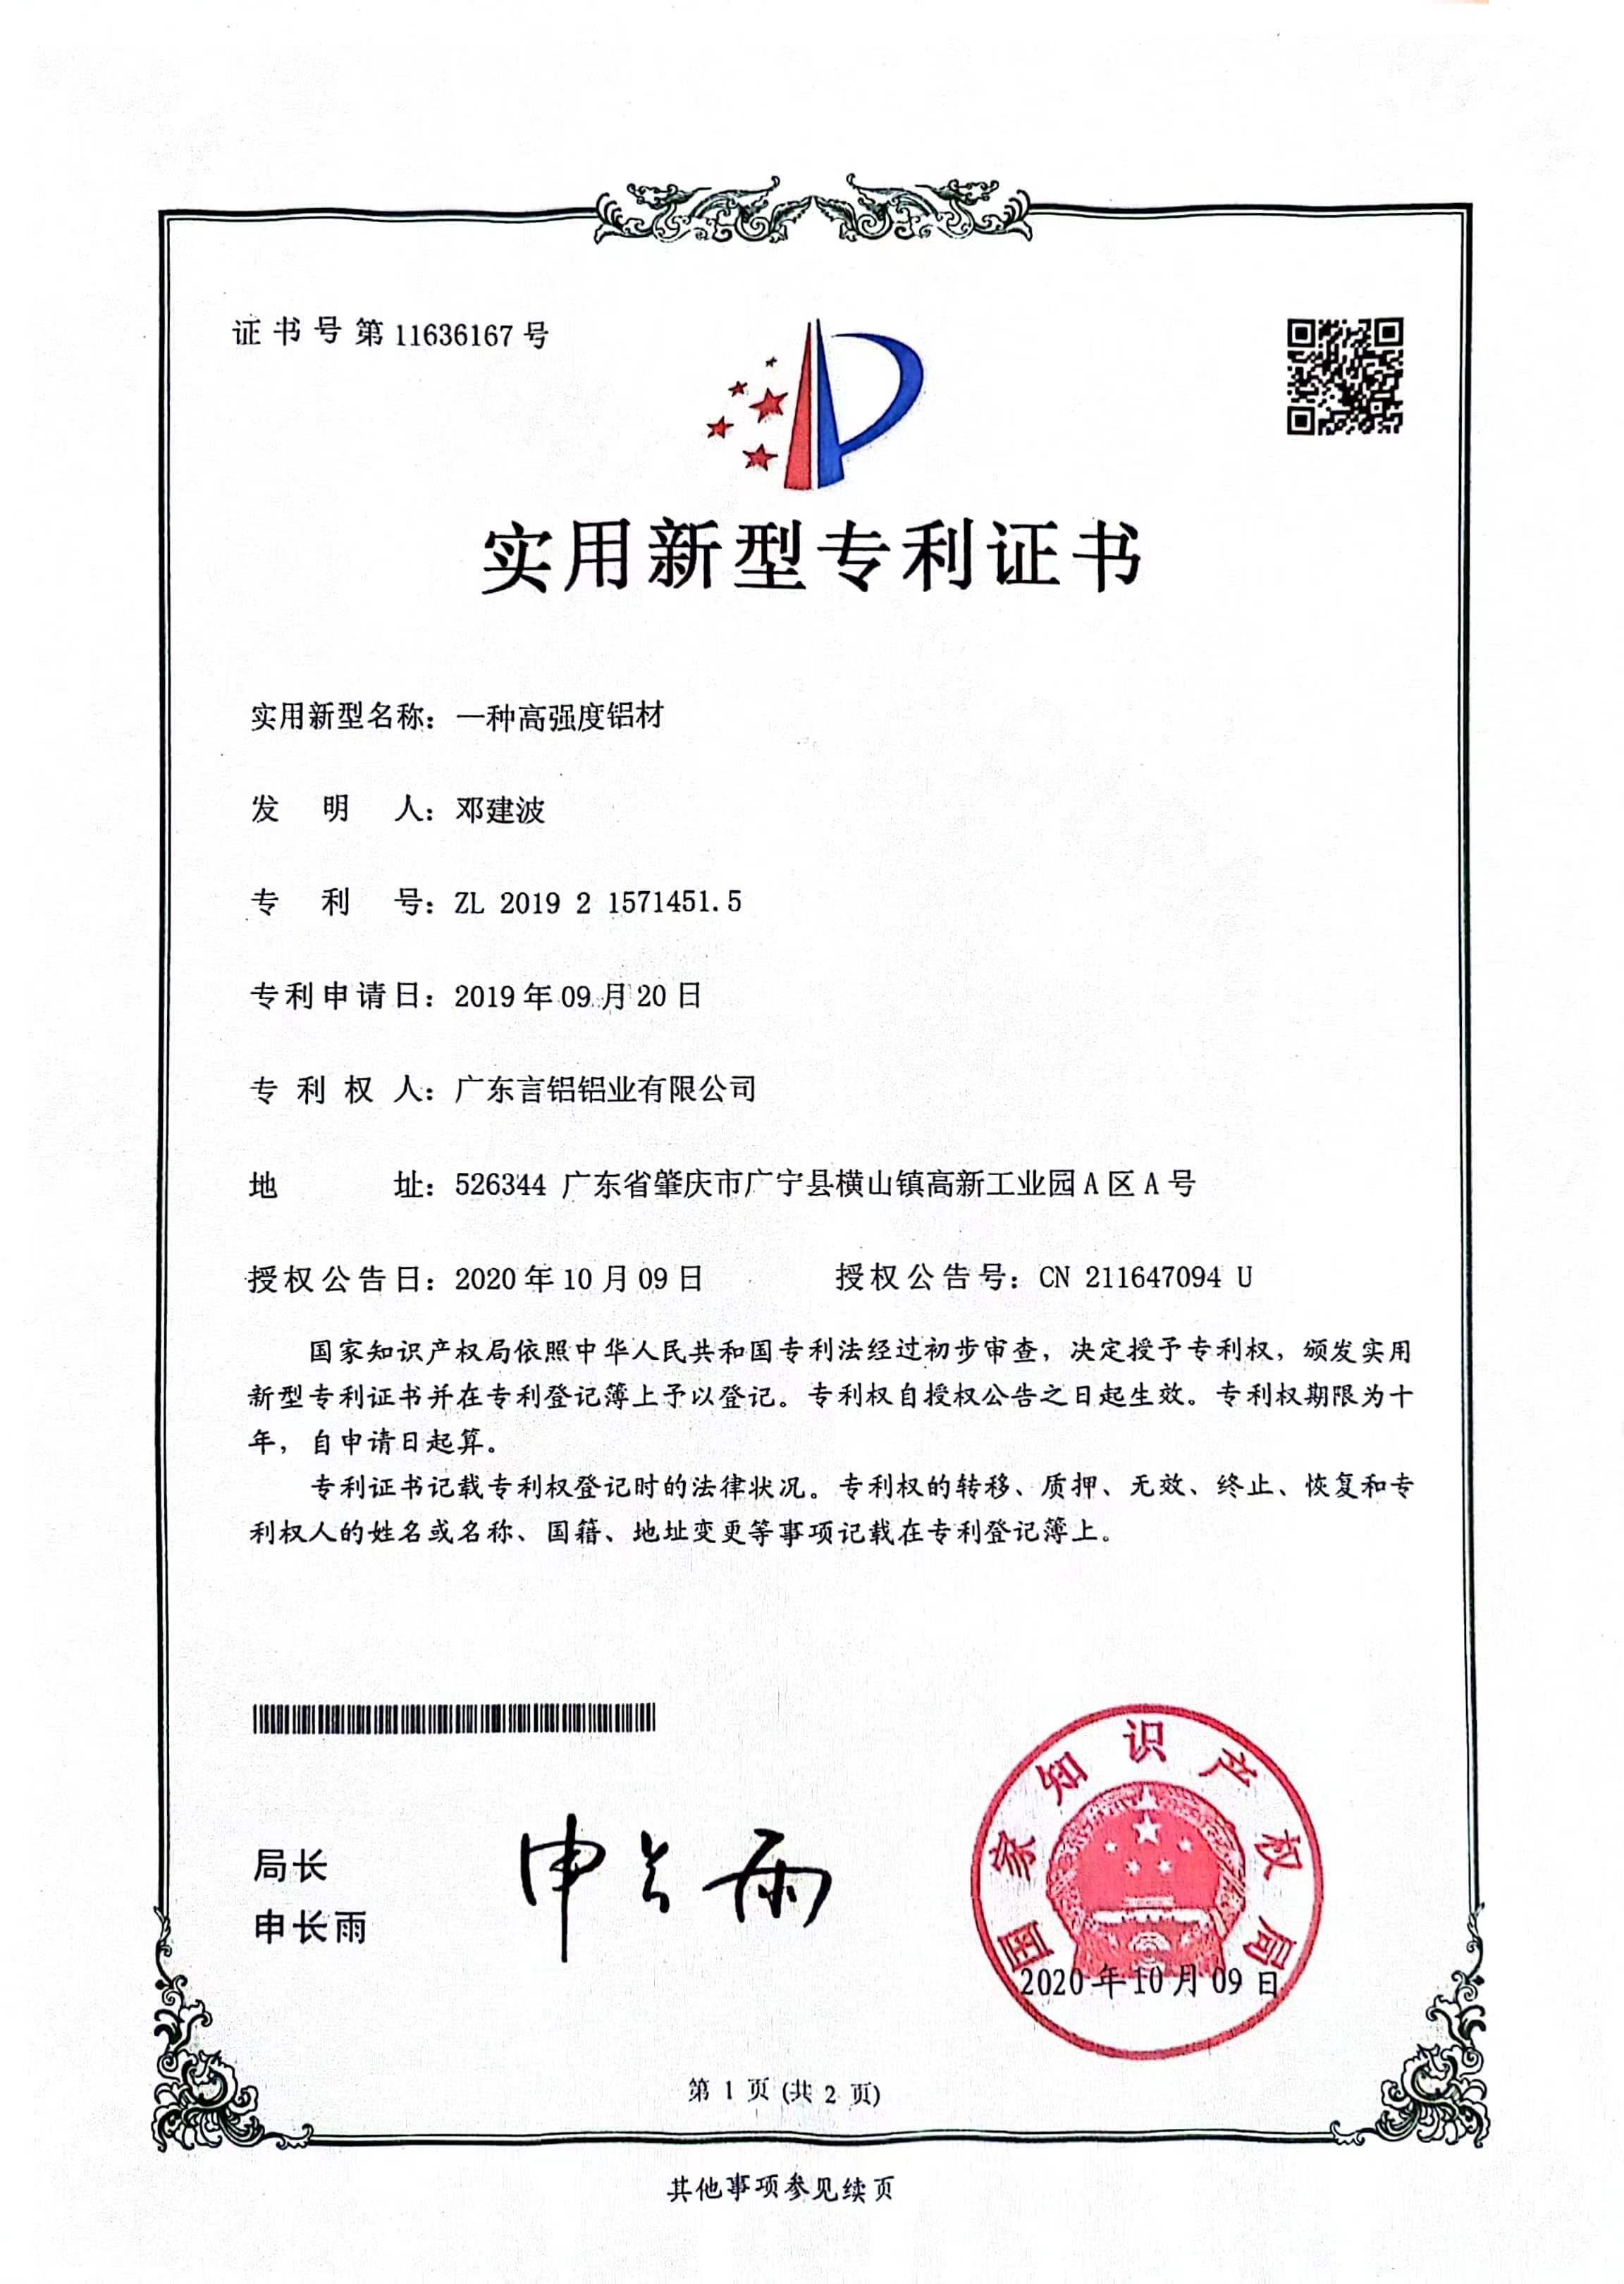 Patent certificate 4